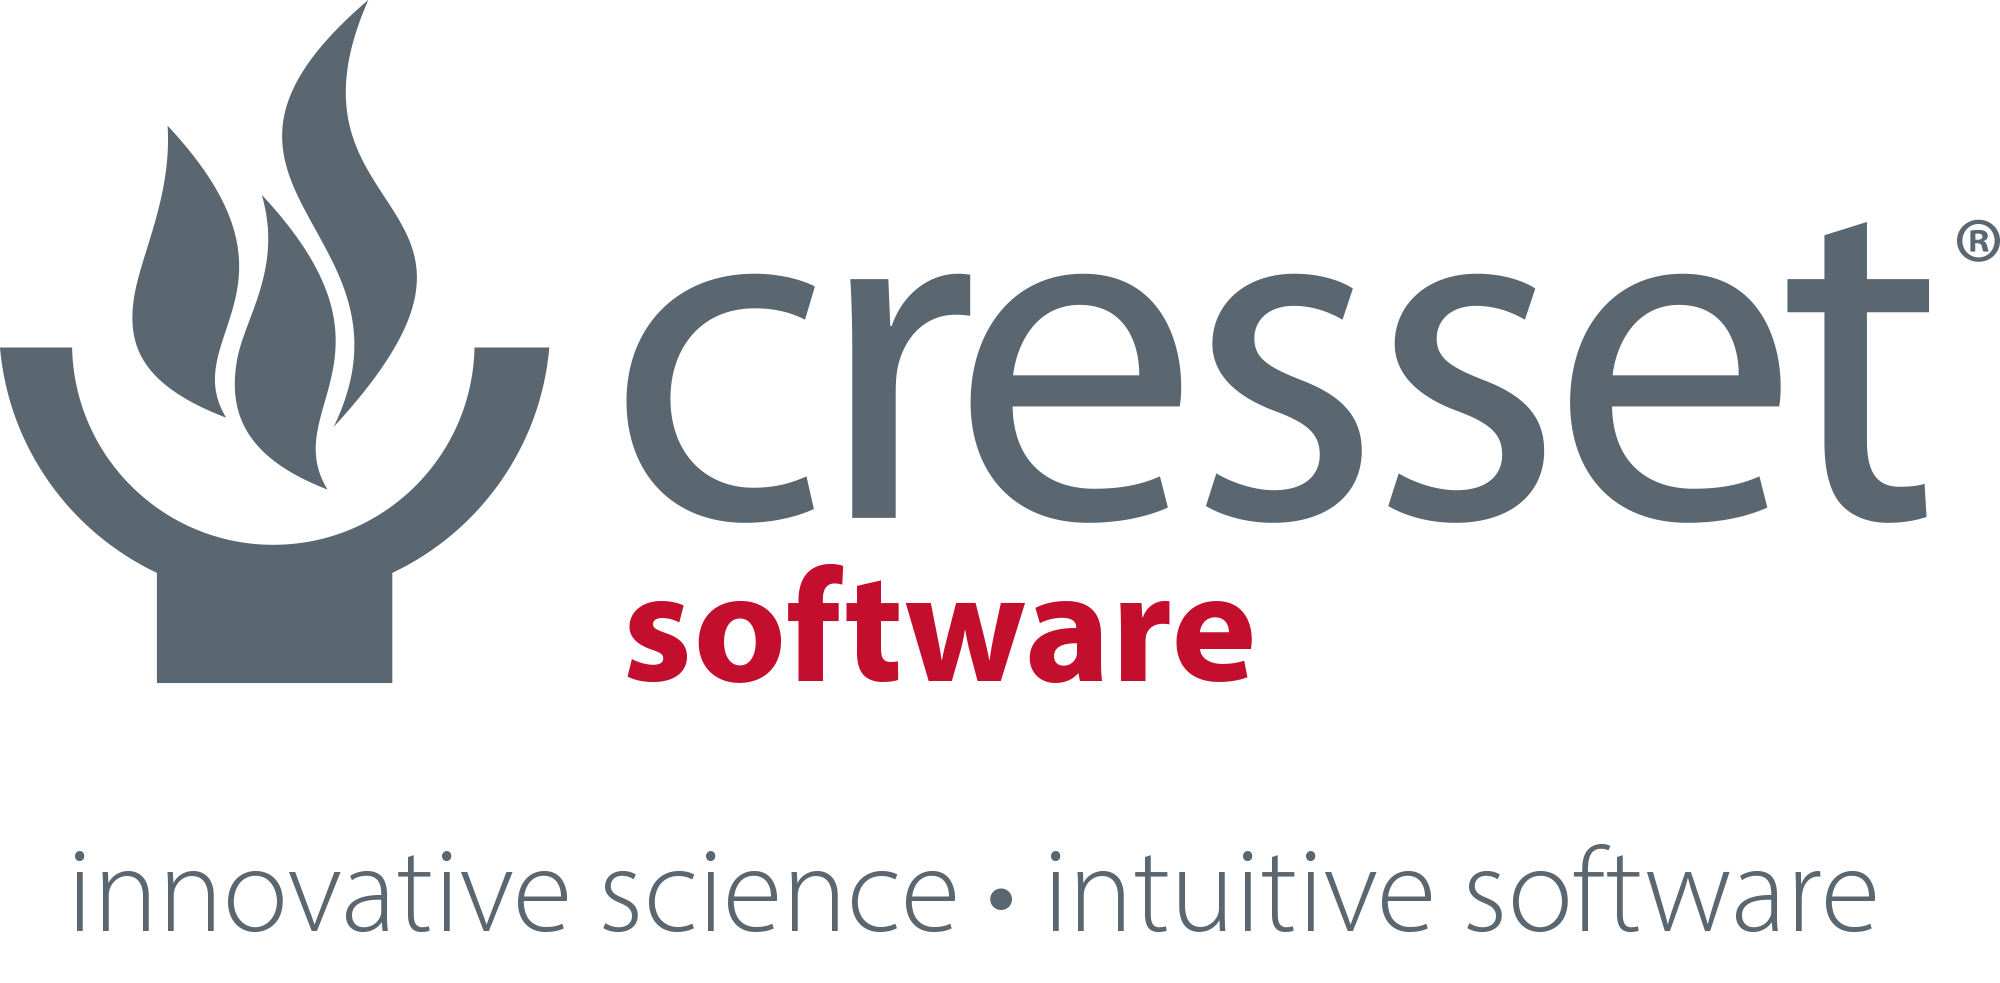 Cresset Software logo